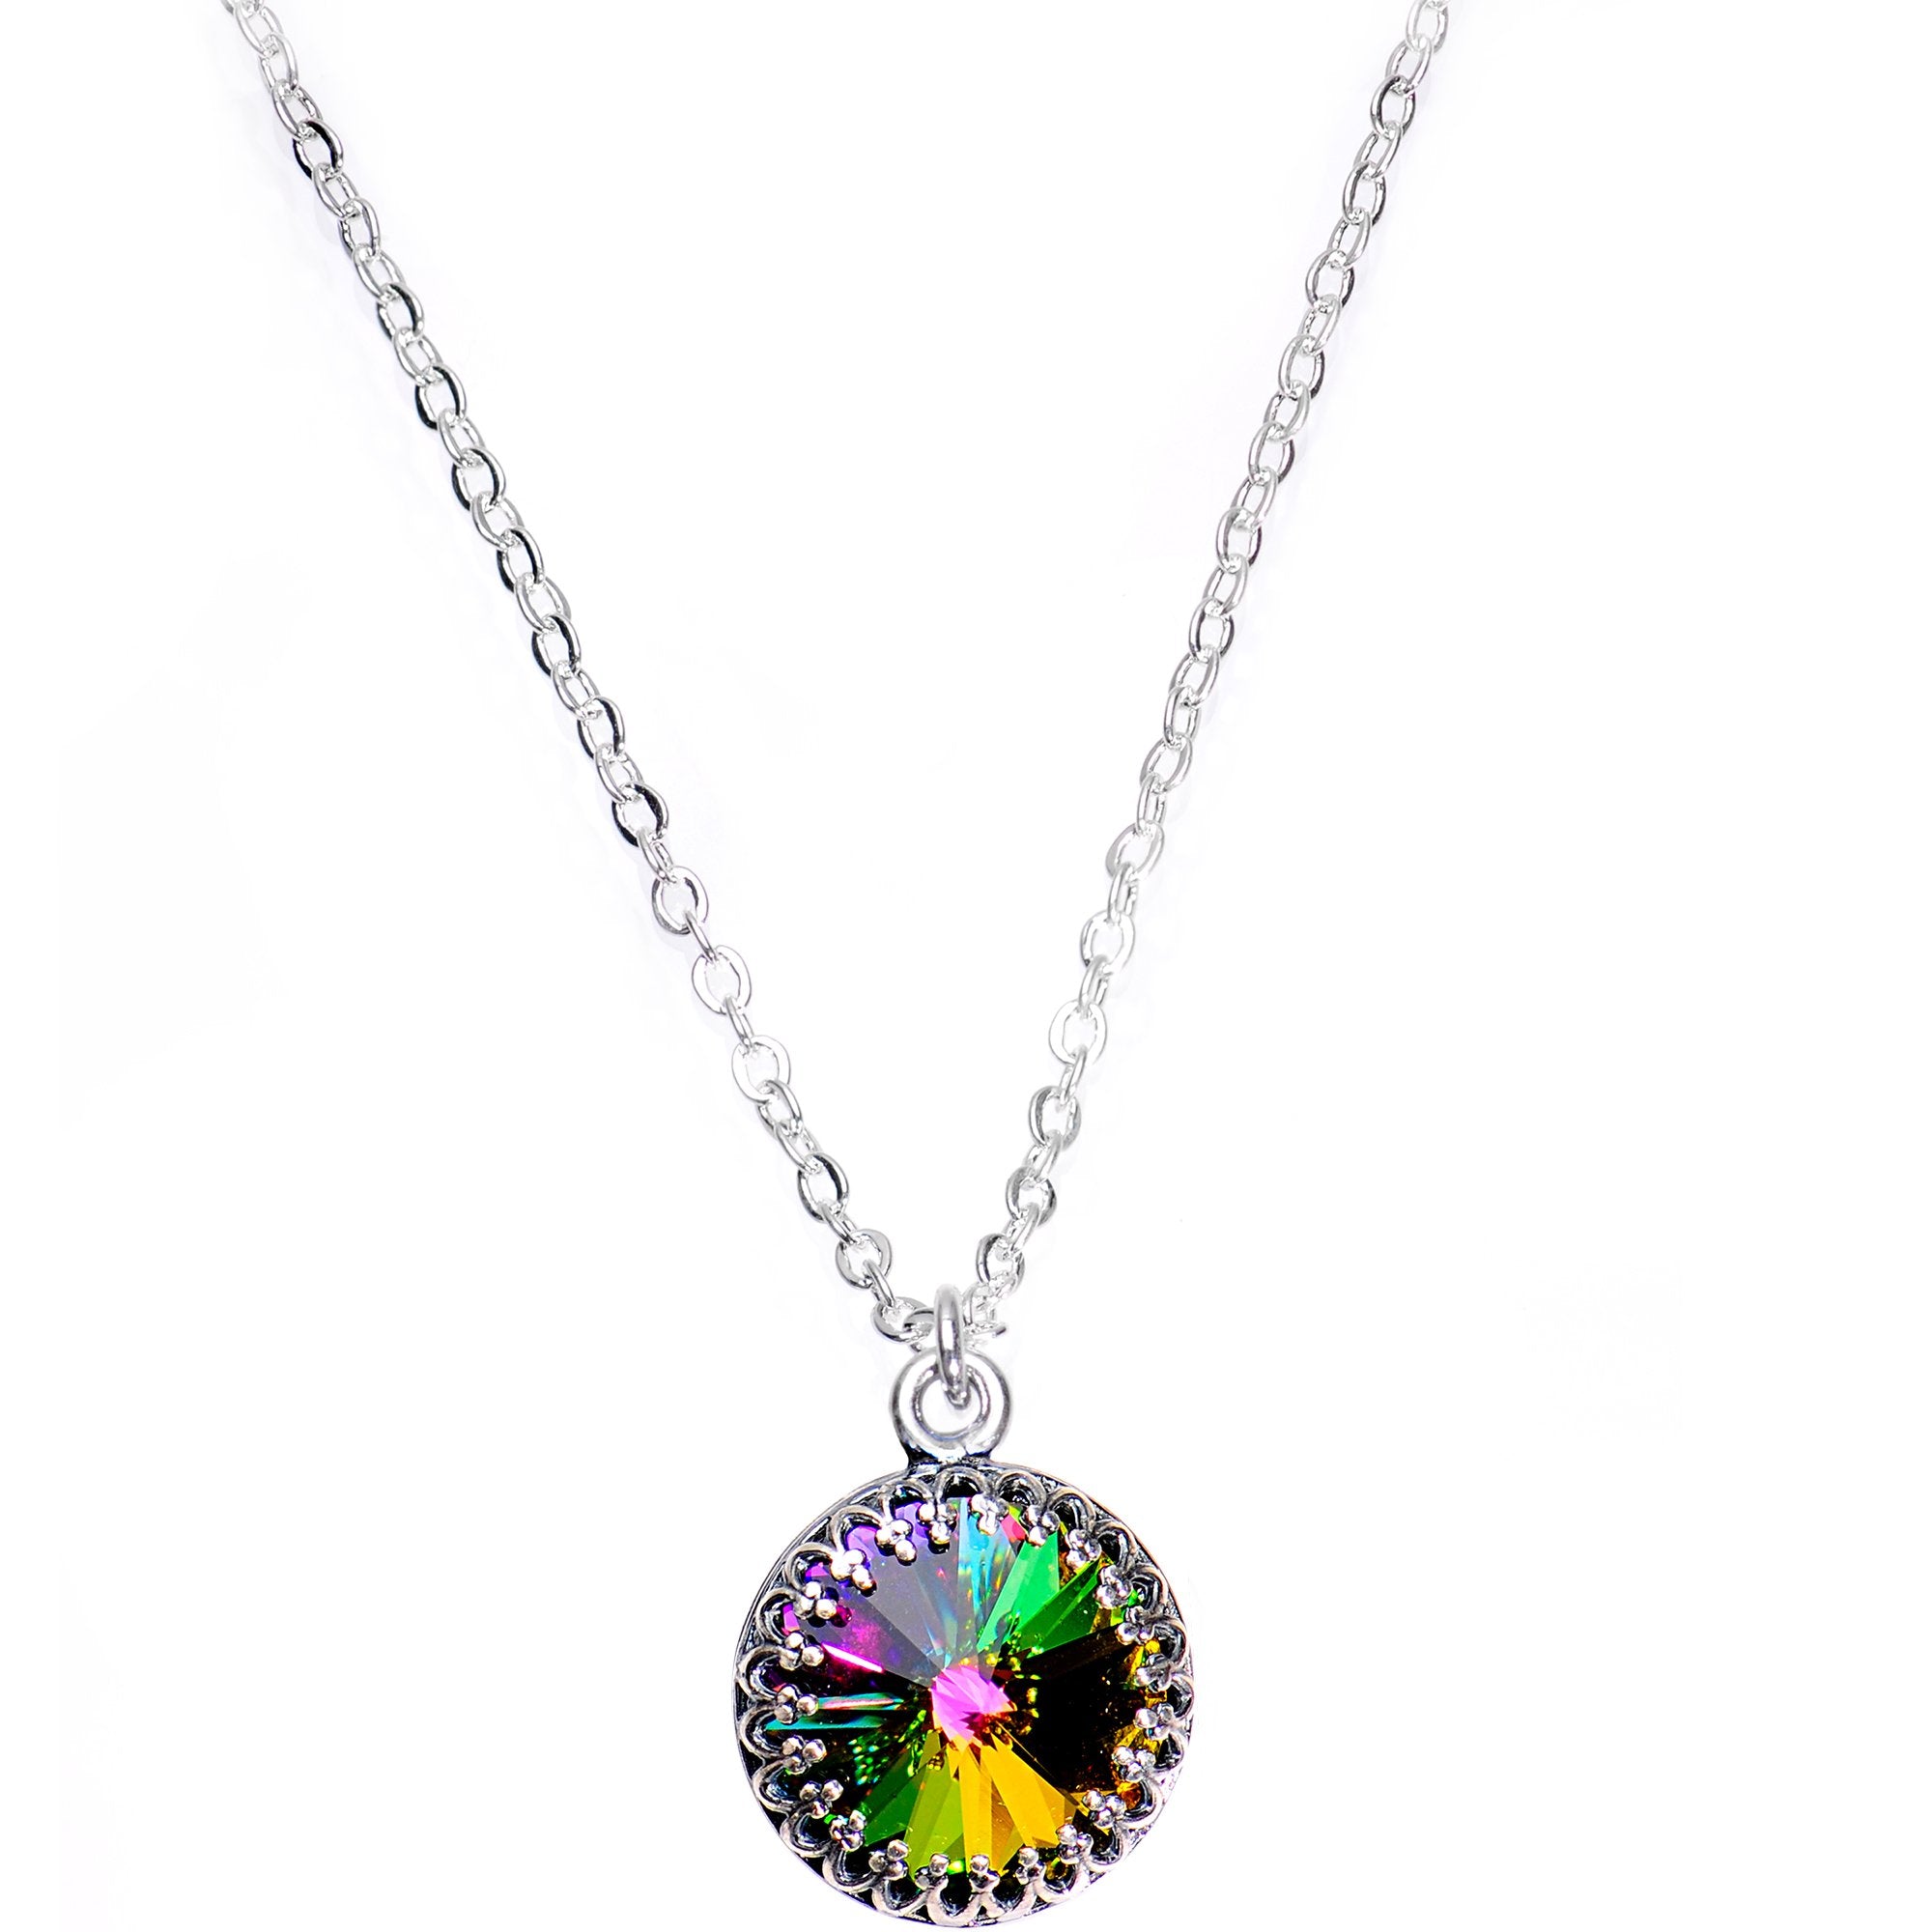 Handmade Rainbow Bombastic Necklace Created with Crystals